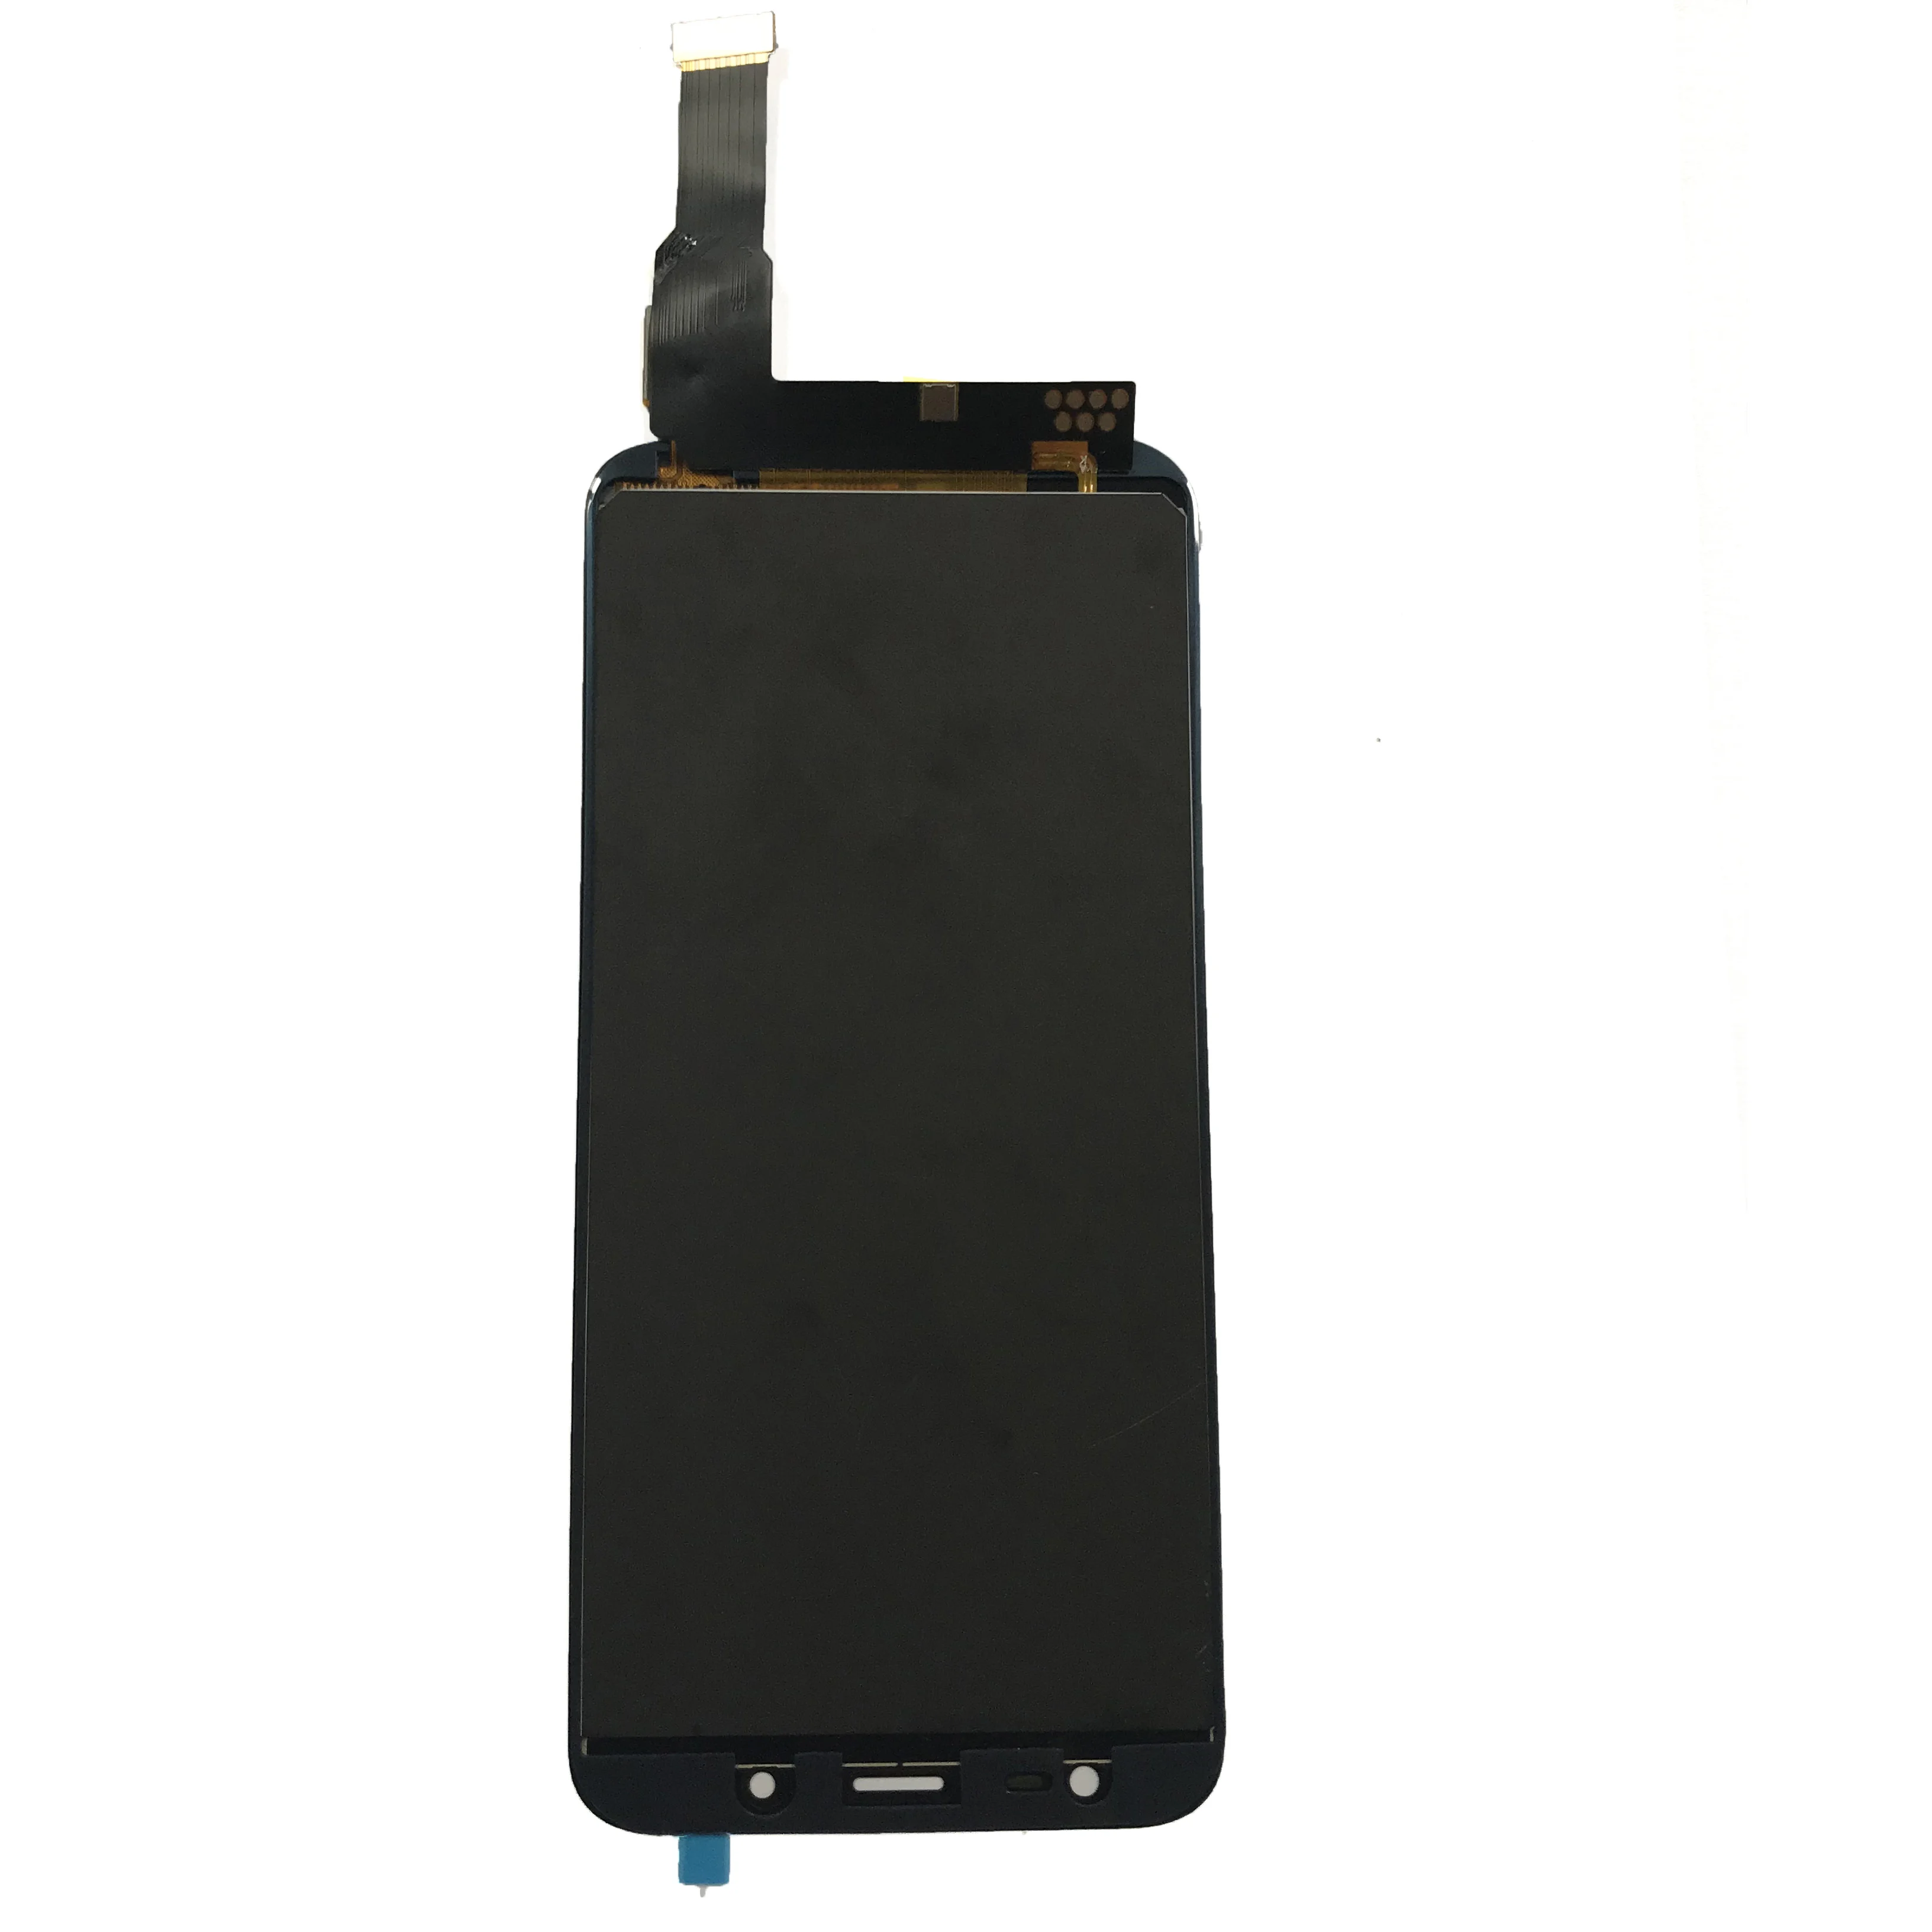 

Pantalla LCD tactil de repuesto para for Samsung Galaxy J6 2018 J600 LCD digitizer display replacement, Black/gold/white